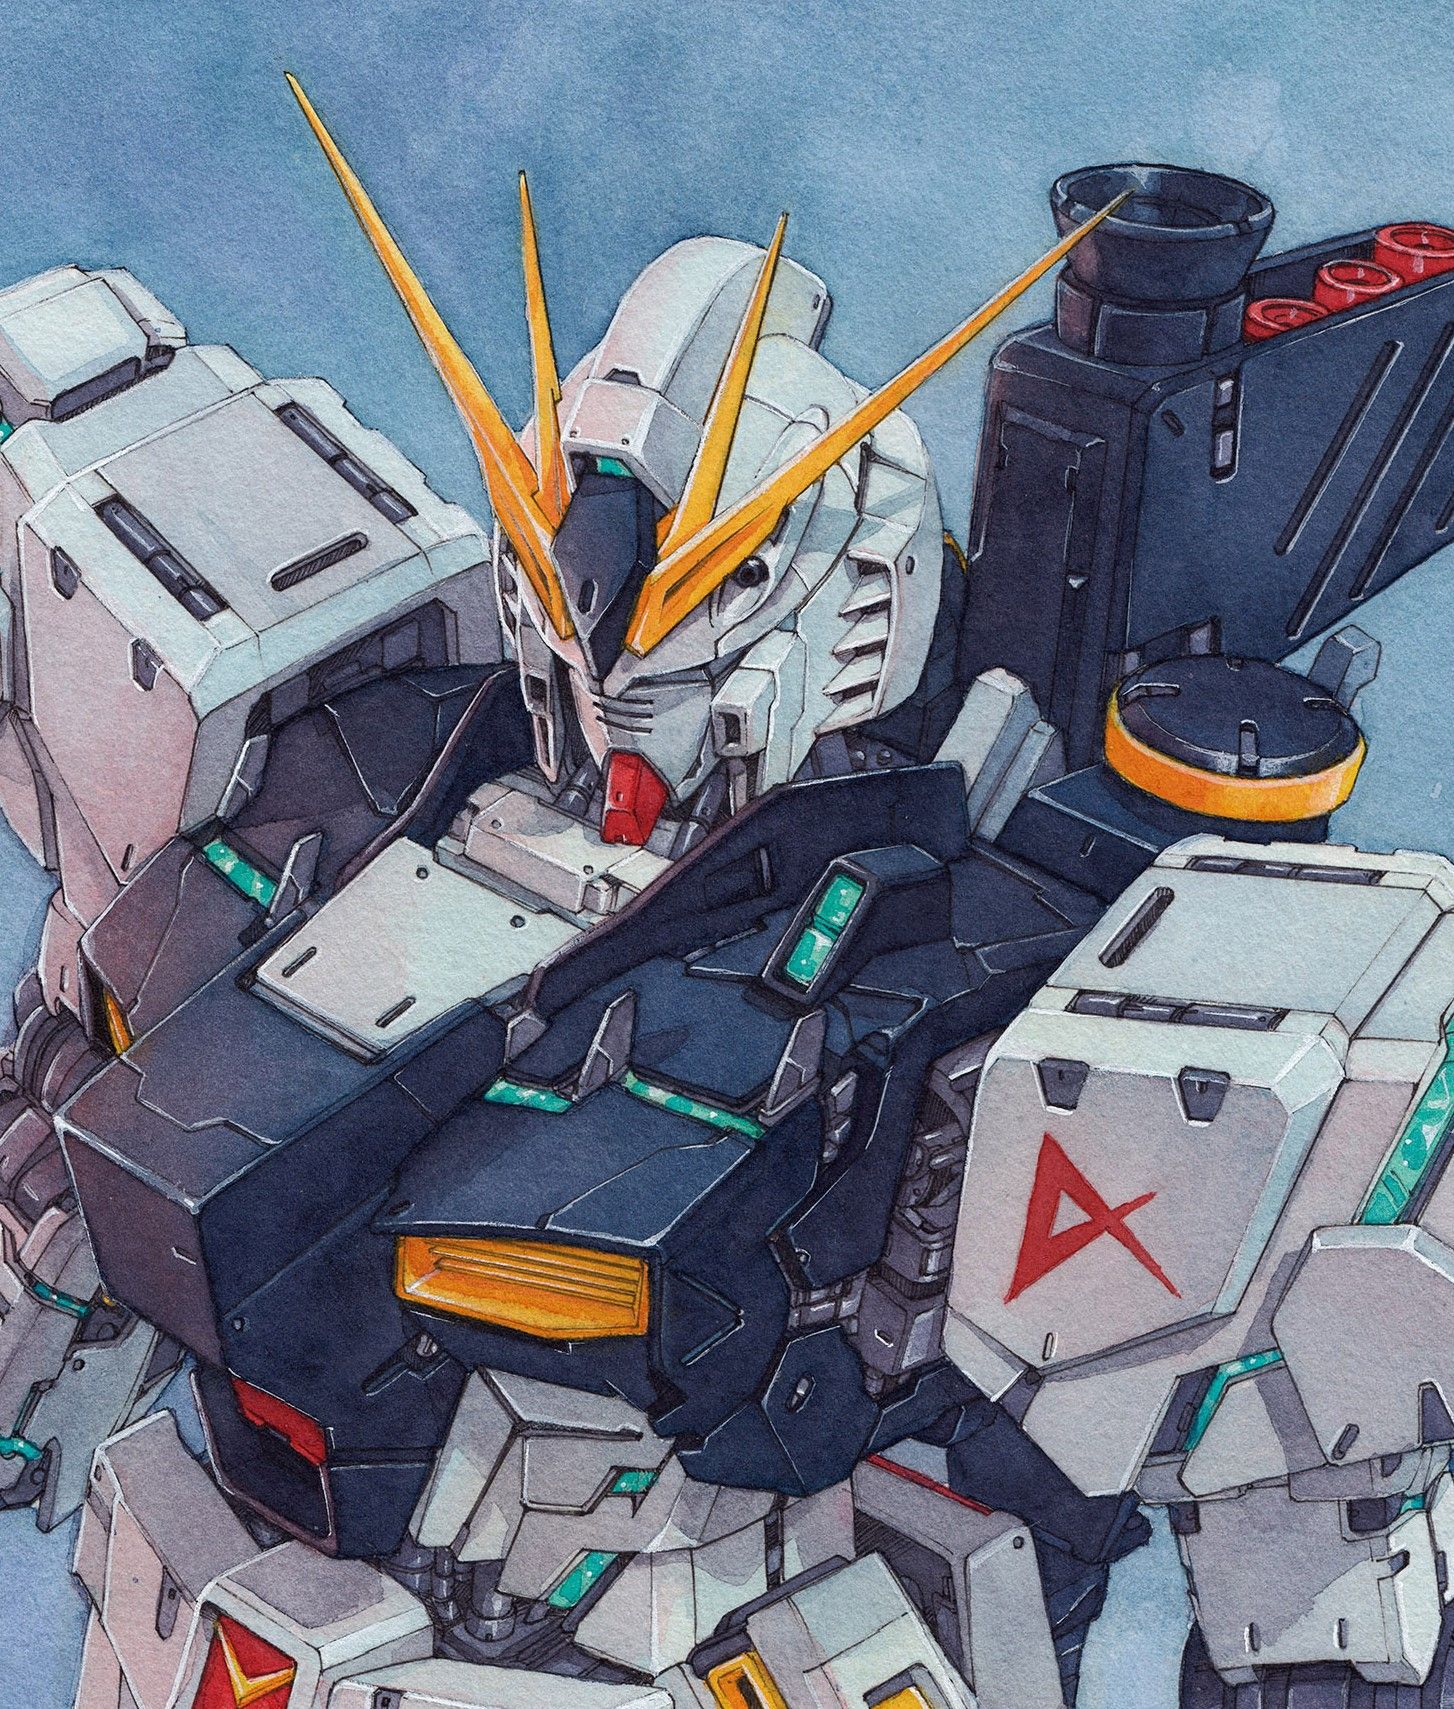 Nu Gundam Wallpapers